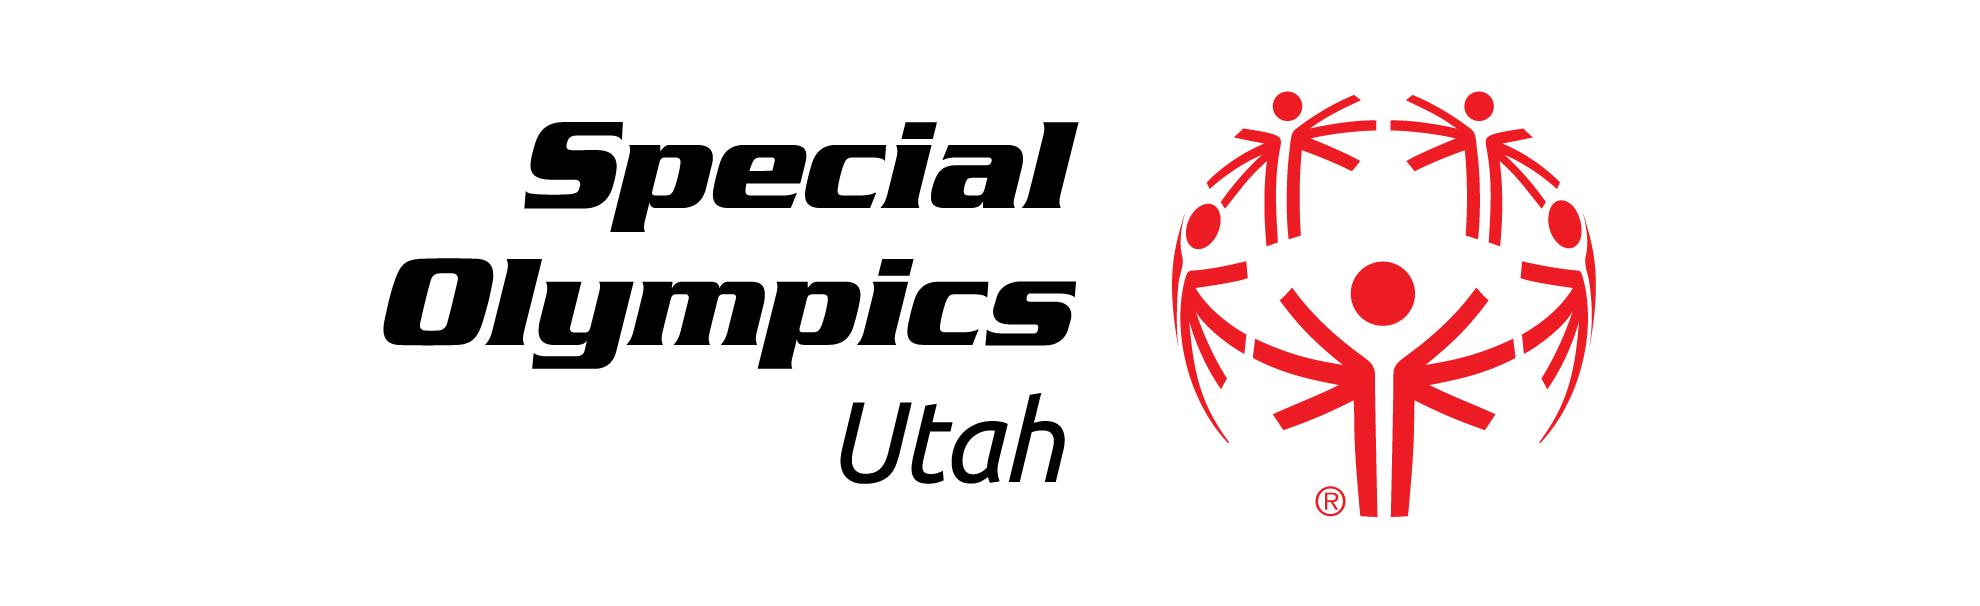 Special Olympics of Utah logo